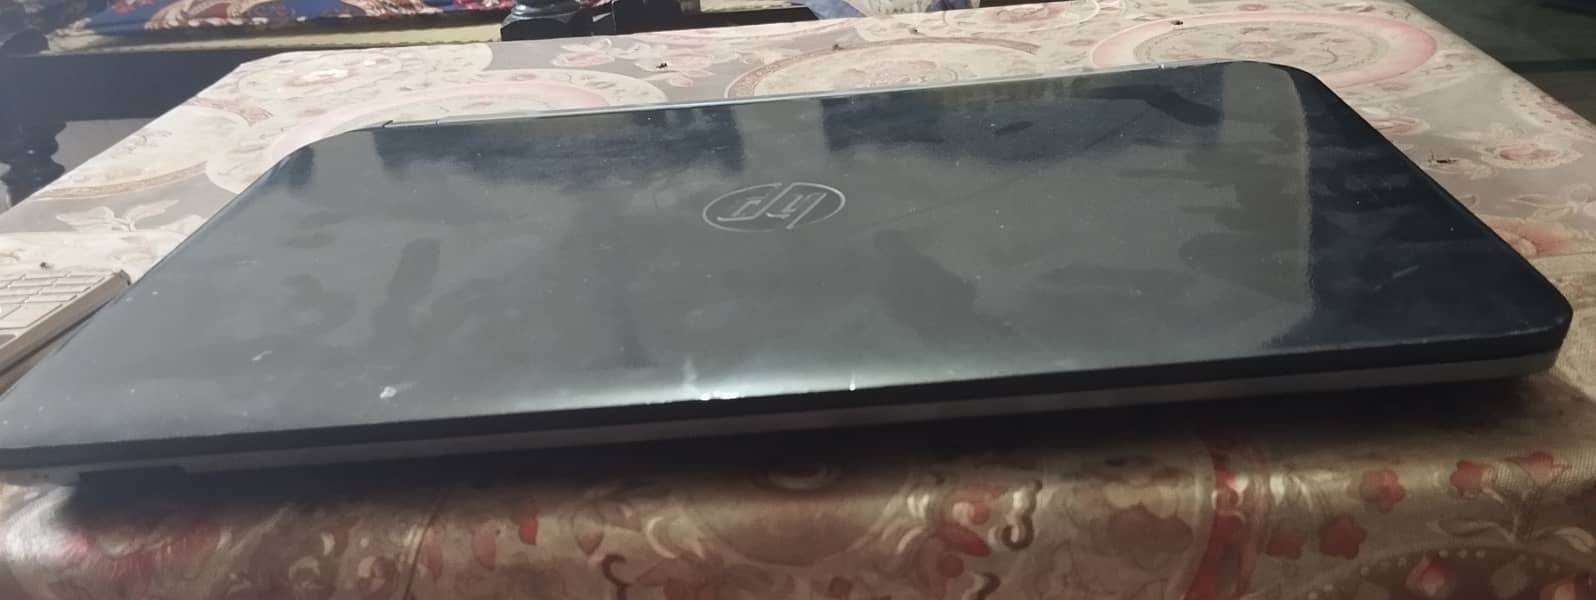 HP laptop / HP probook laptop 5